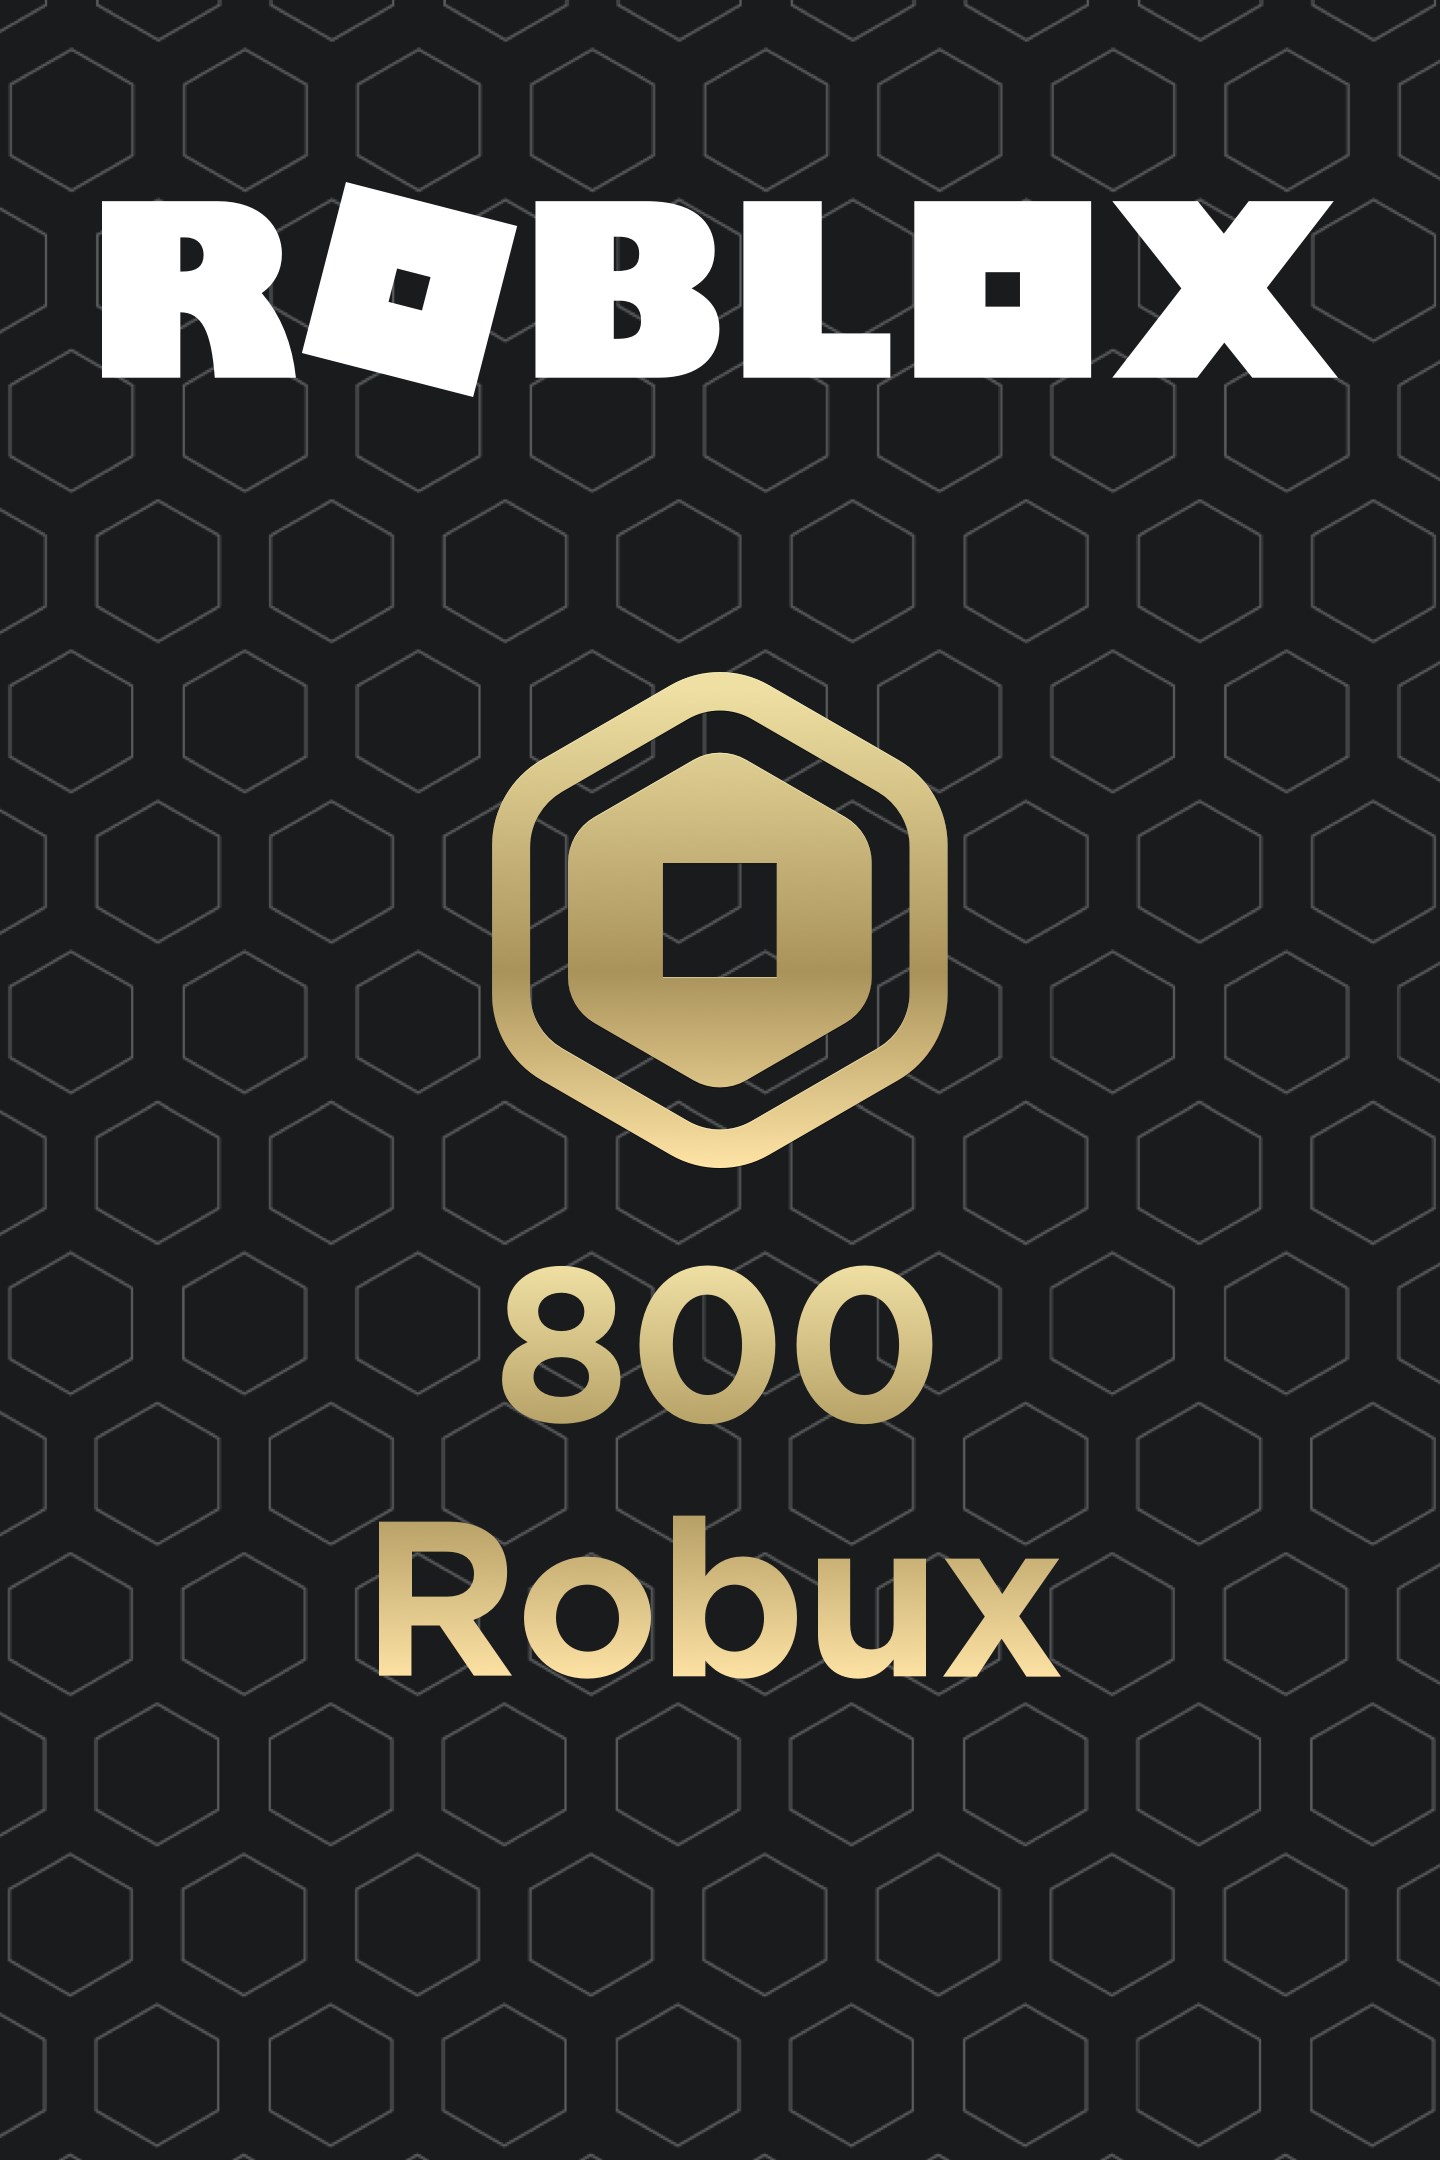 roblox video game xbox 360